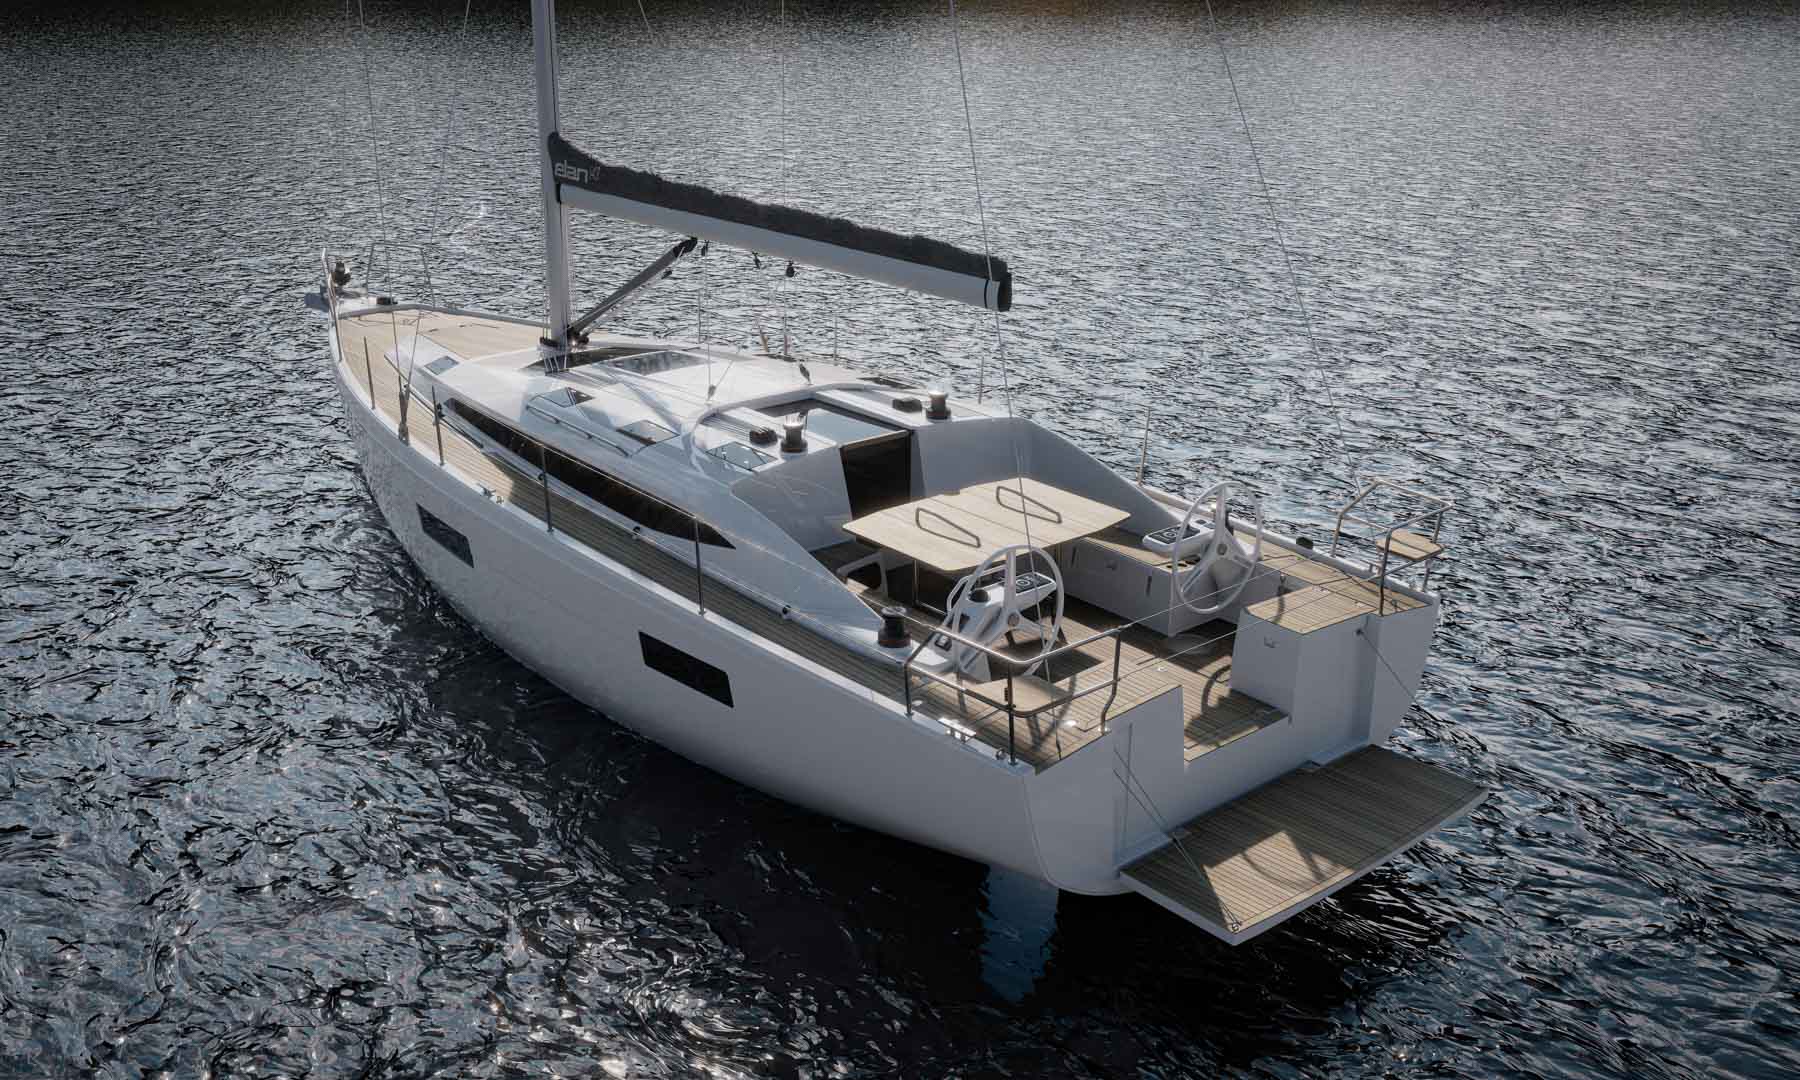 elan-impression-43-family-cruiser-sailing-yacht-cockpit-open-platform